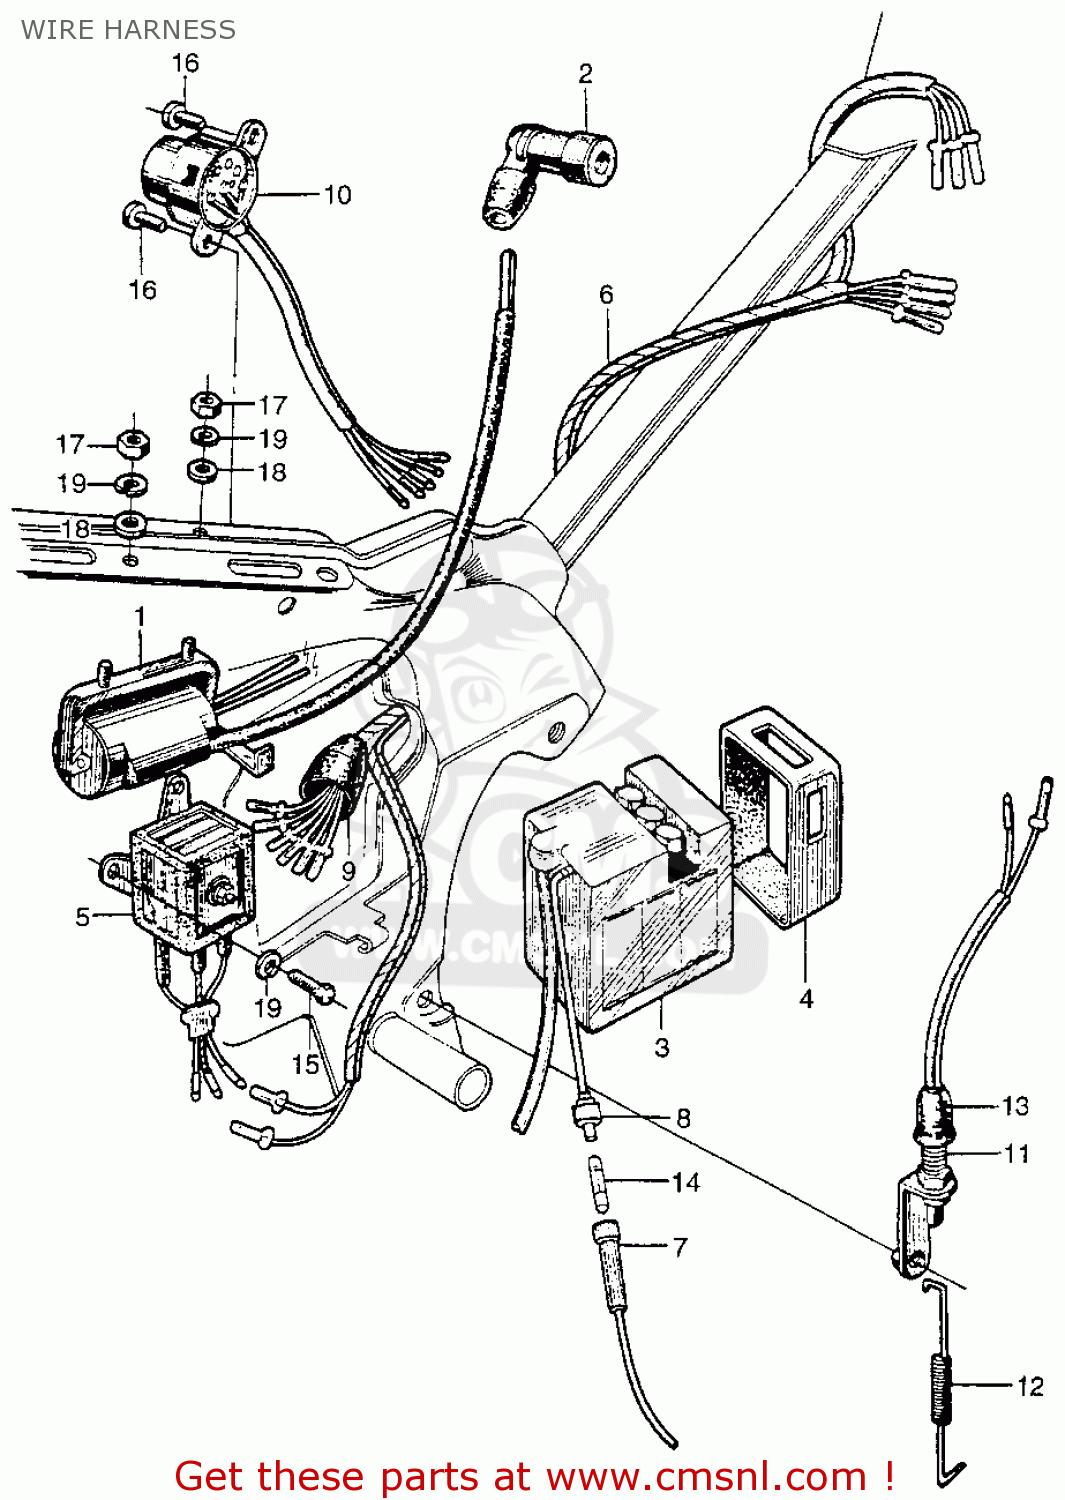 Wiring Diagram Honda Ct90 Trail Bike - Wiring Diagram Schemas